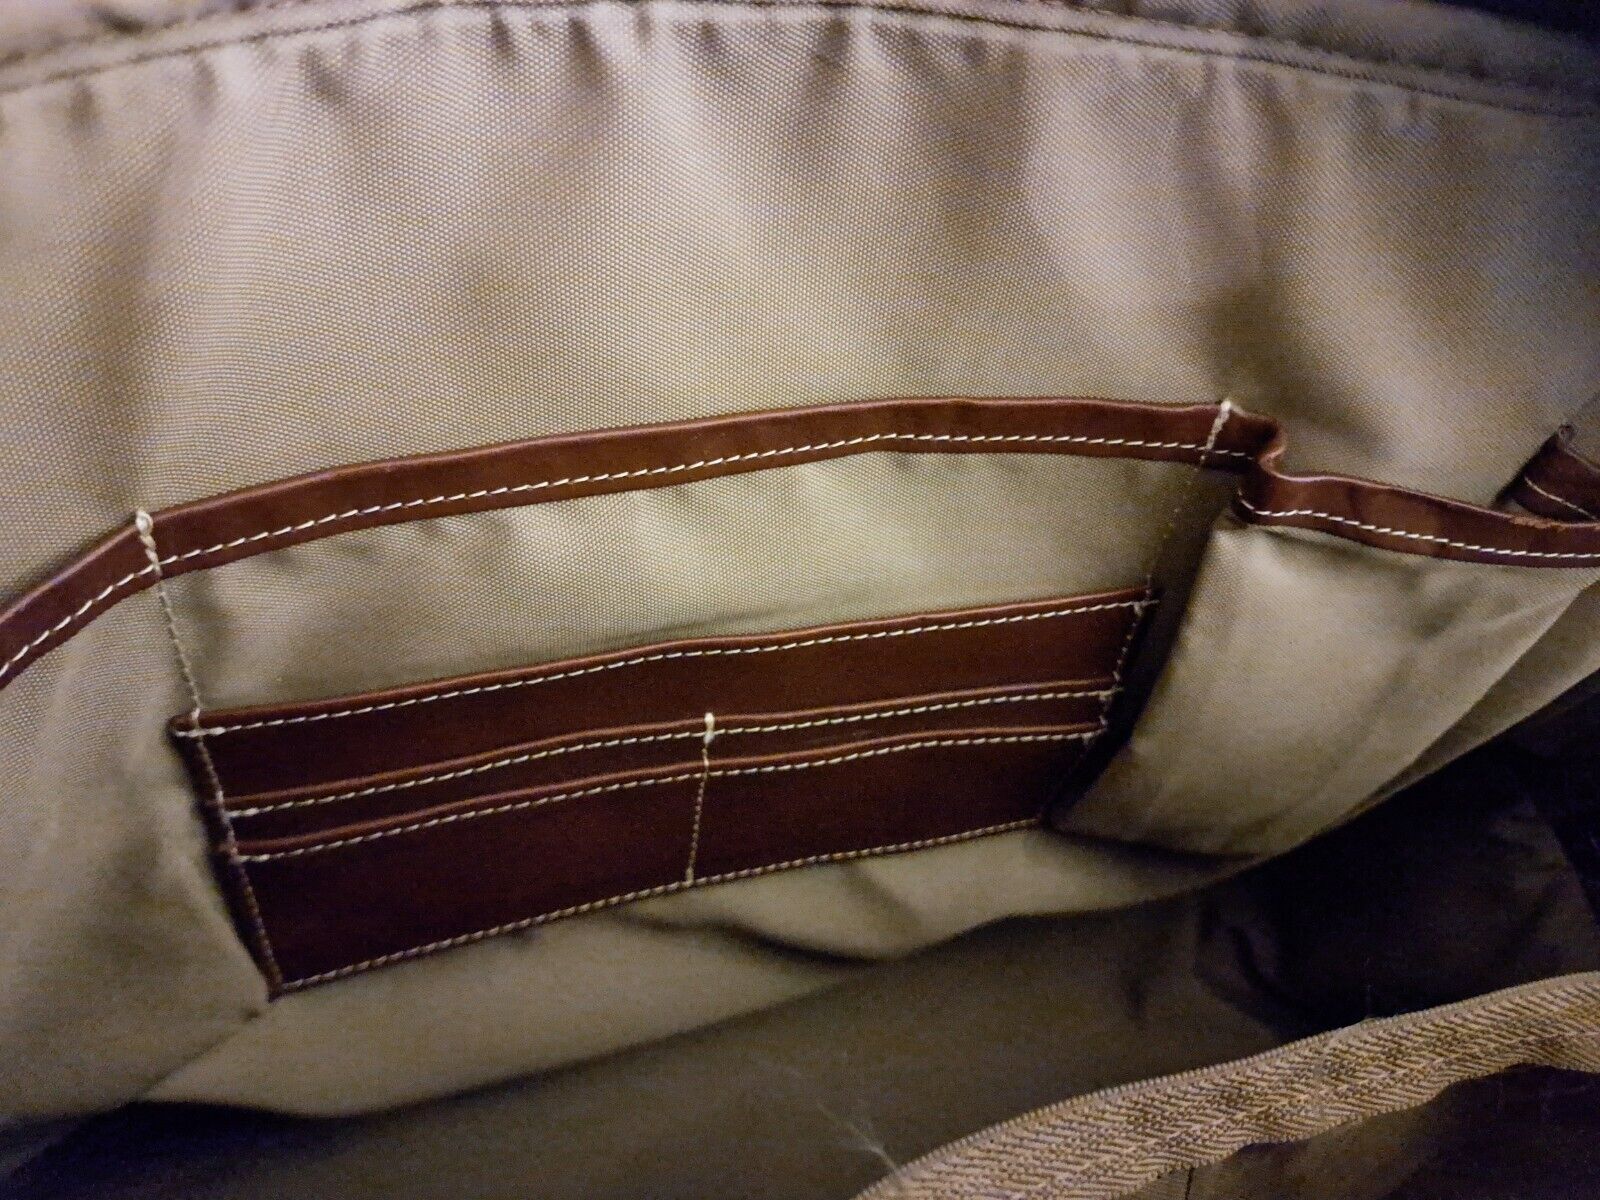 VTG HARTMANN geometric print leather trim cosmetic bag travel bag organizer tote